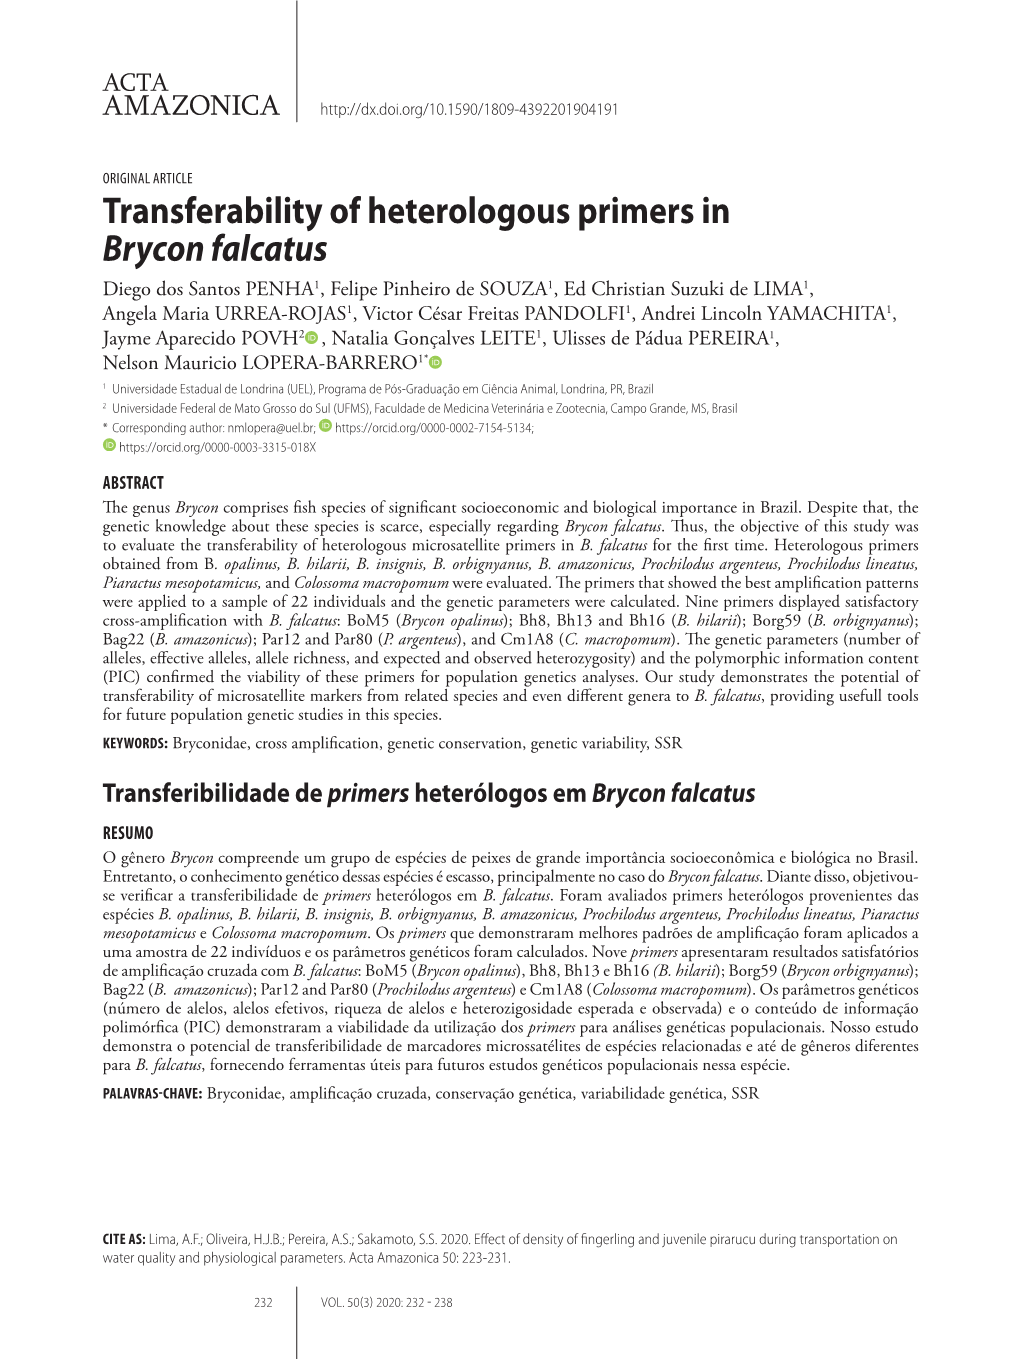 Transferability of Heterologous Primers in Brycon Falcatus